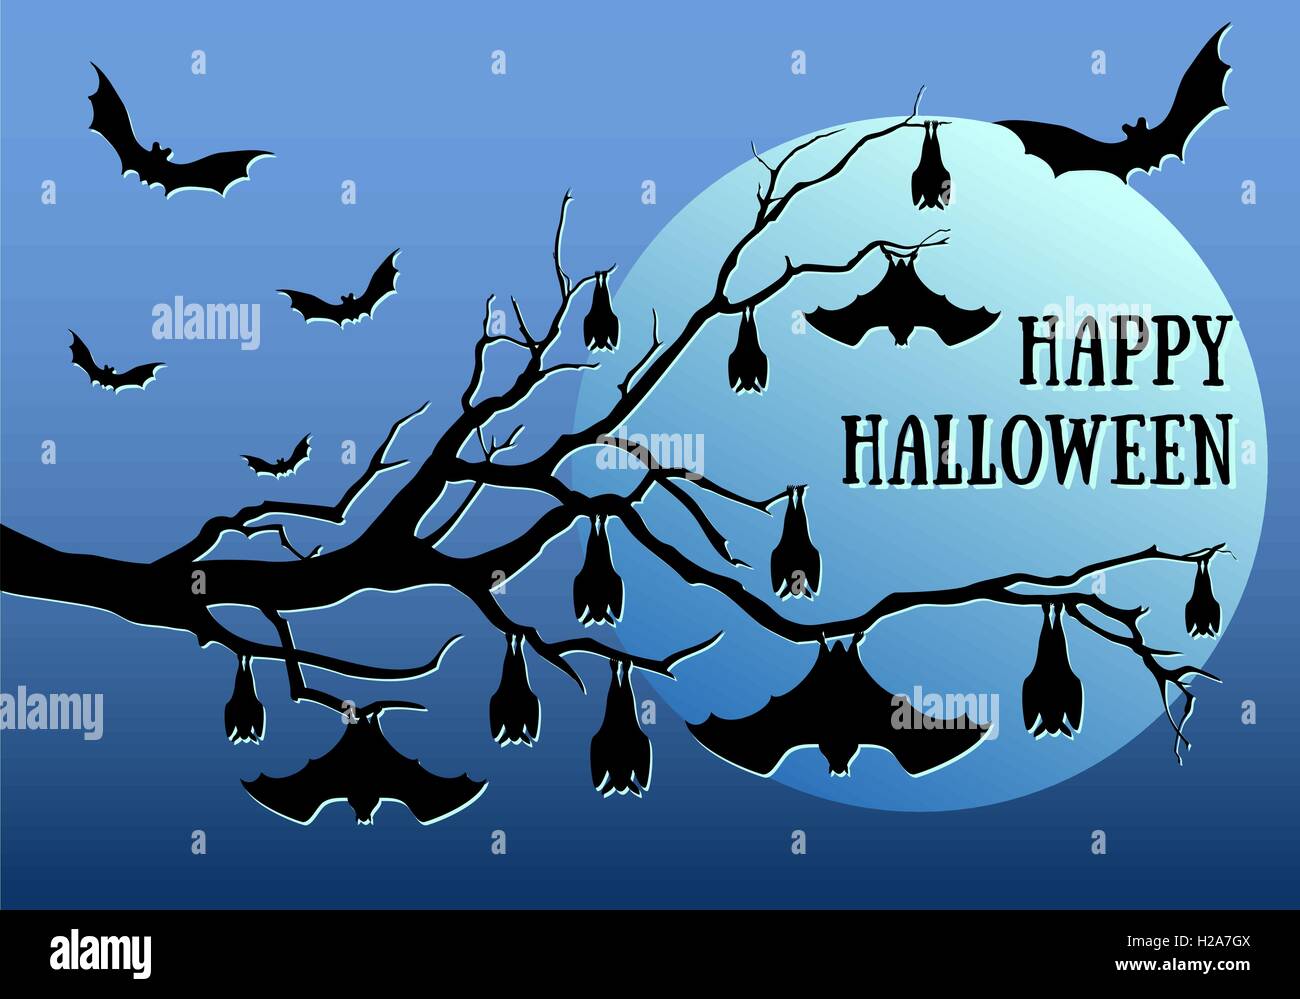 Halloween tree with hanging bats, vector background illustration Stock Vector